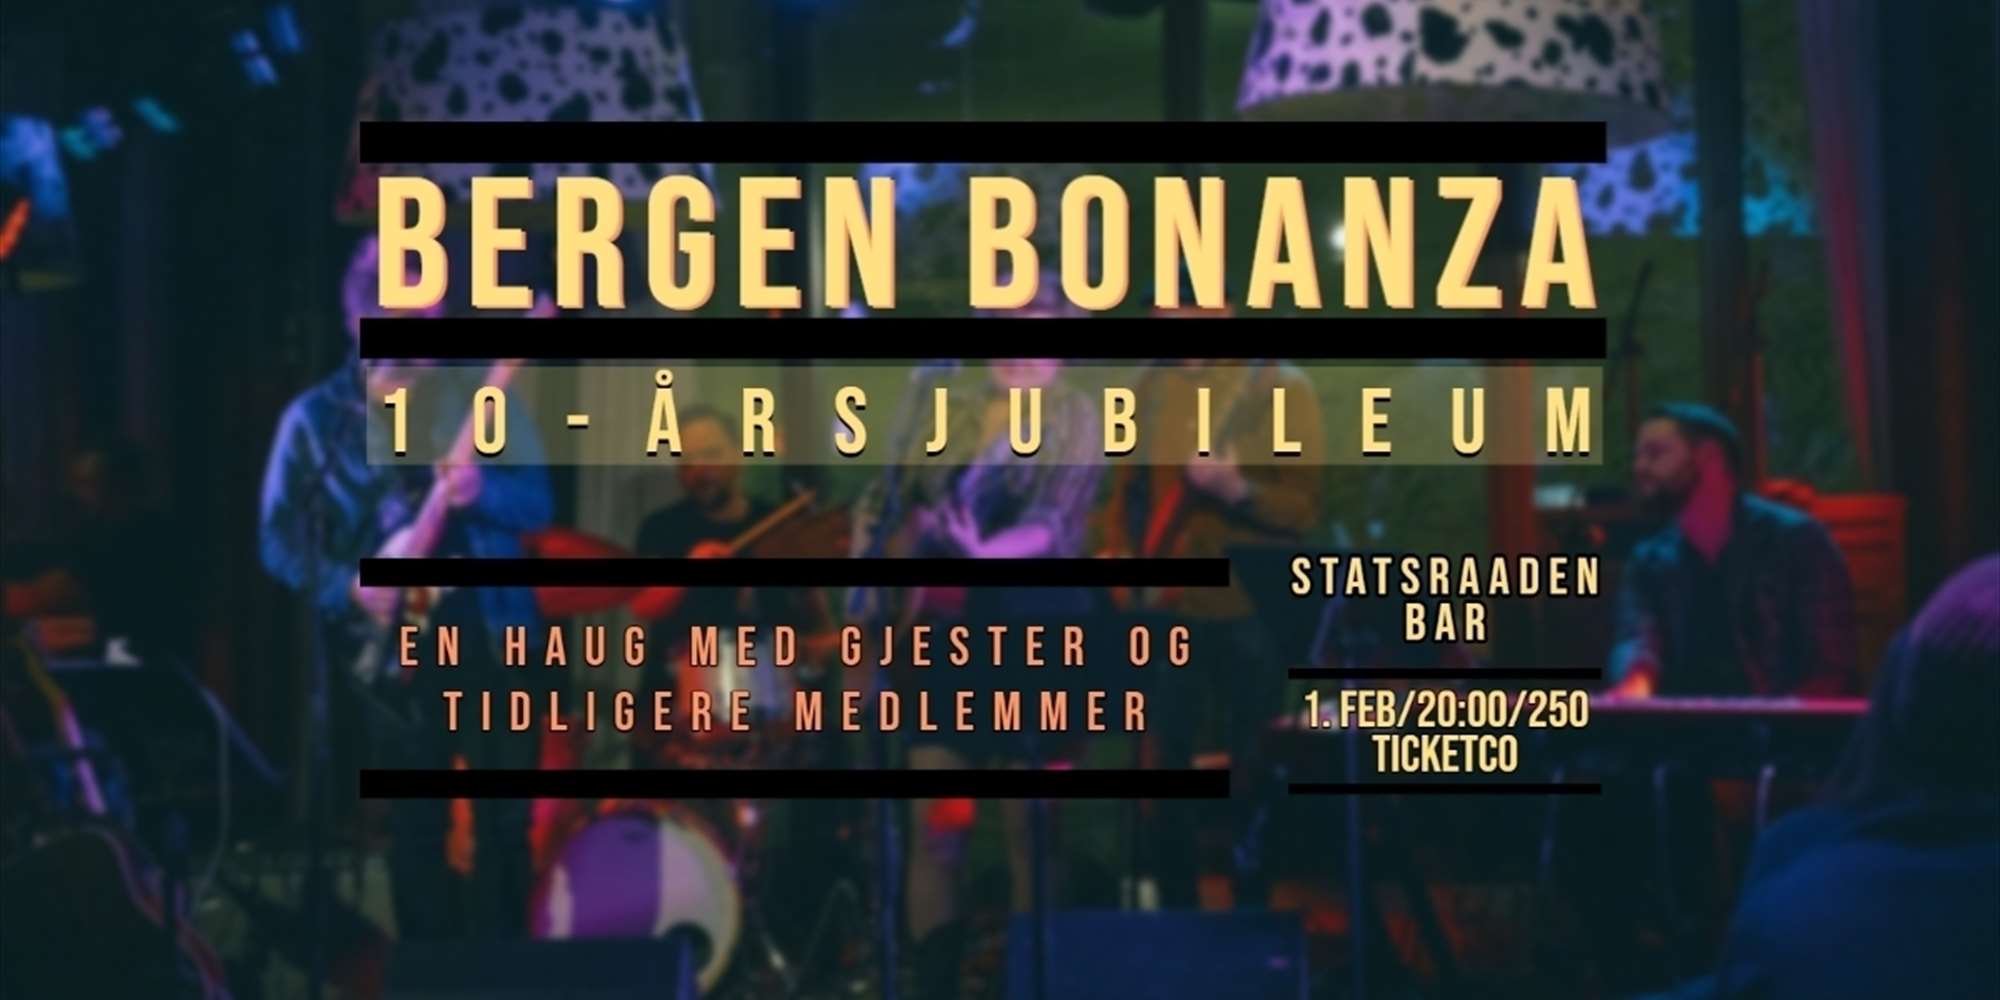 Bergen Bonanza 10-årsjubileum